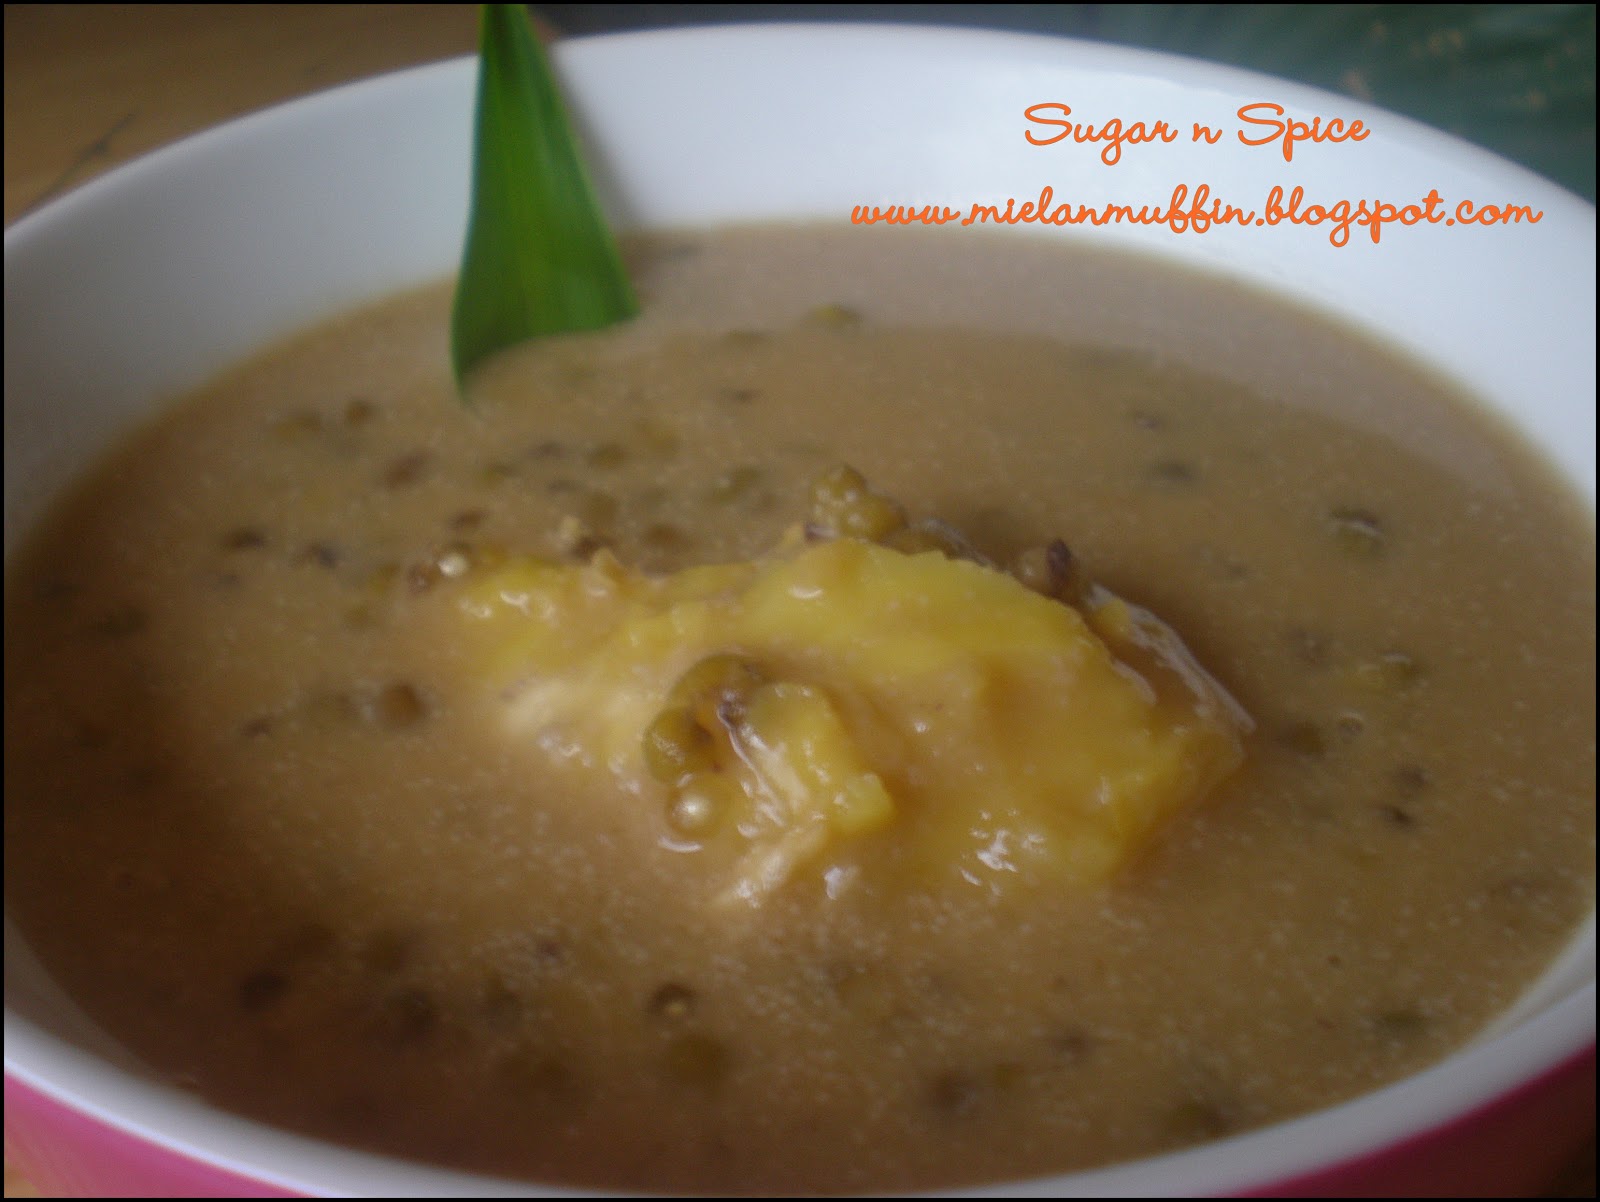 Sugar 'n' spice Bubur Kacang Durian